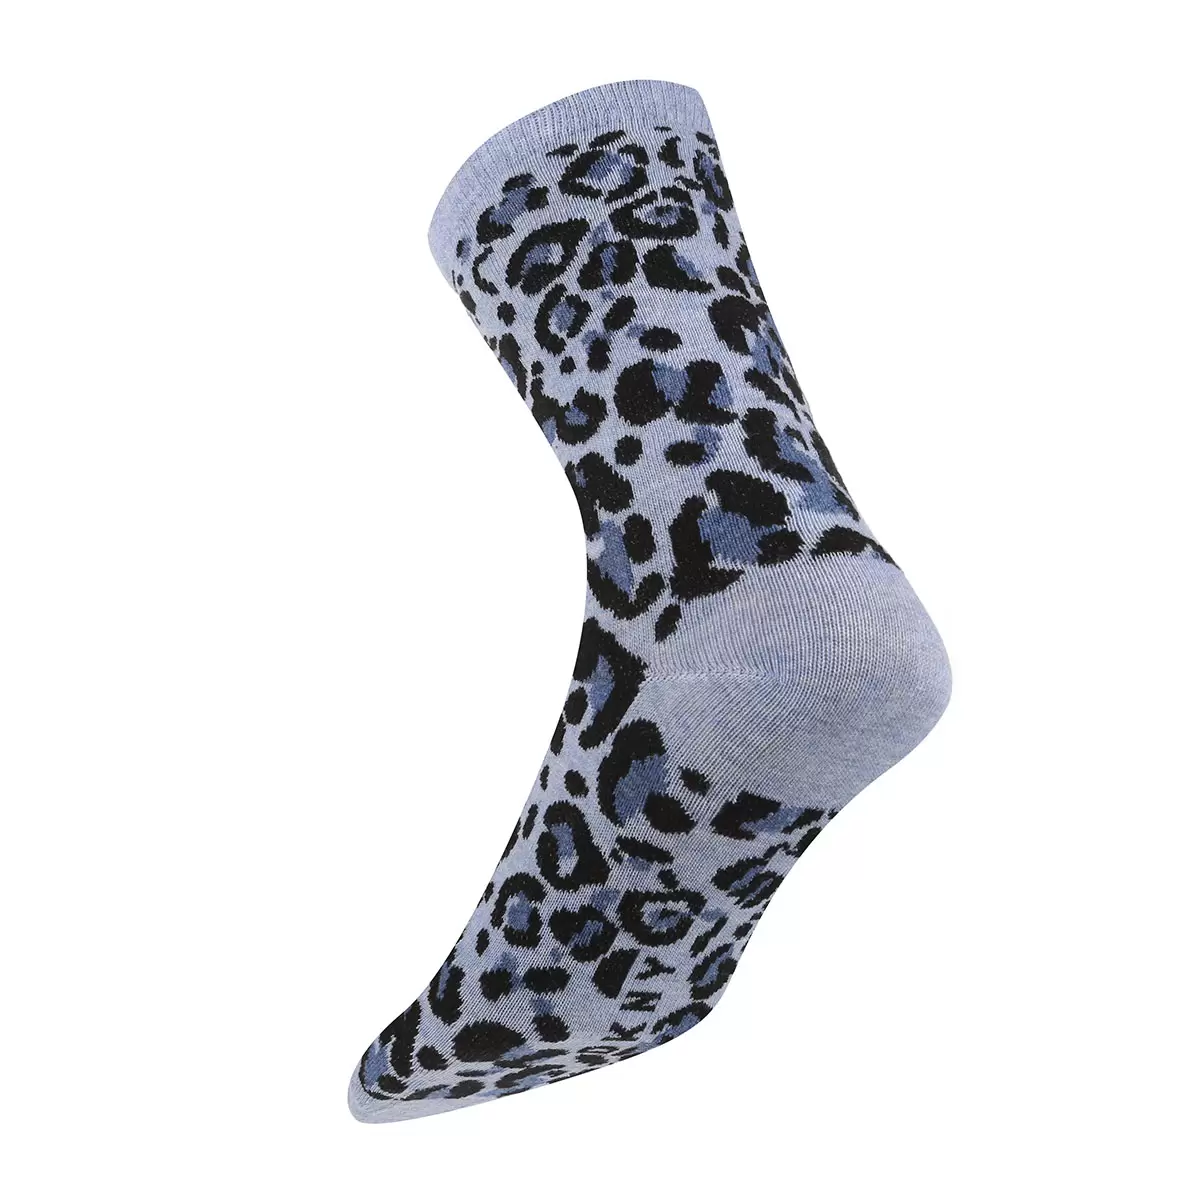 DKNY Women's Patterned Socks, 6 Pack in Animal Combo